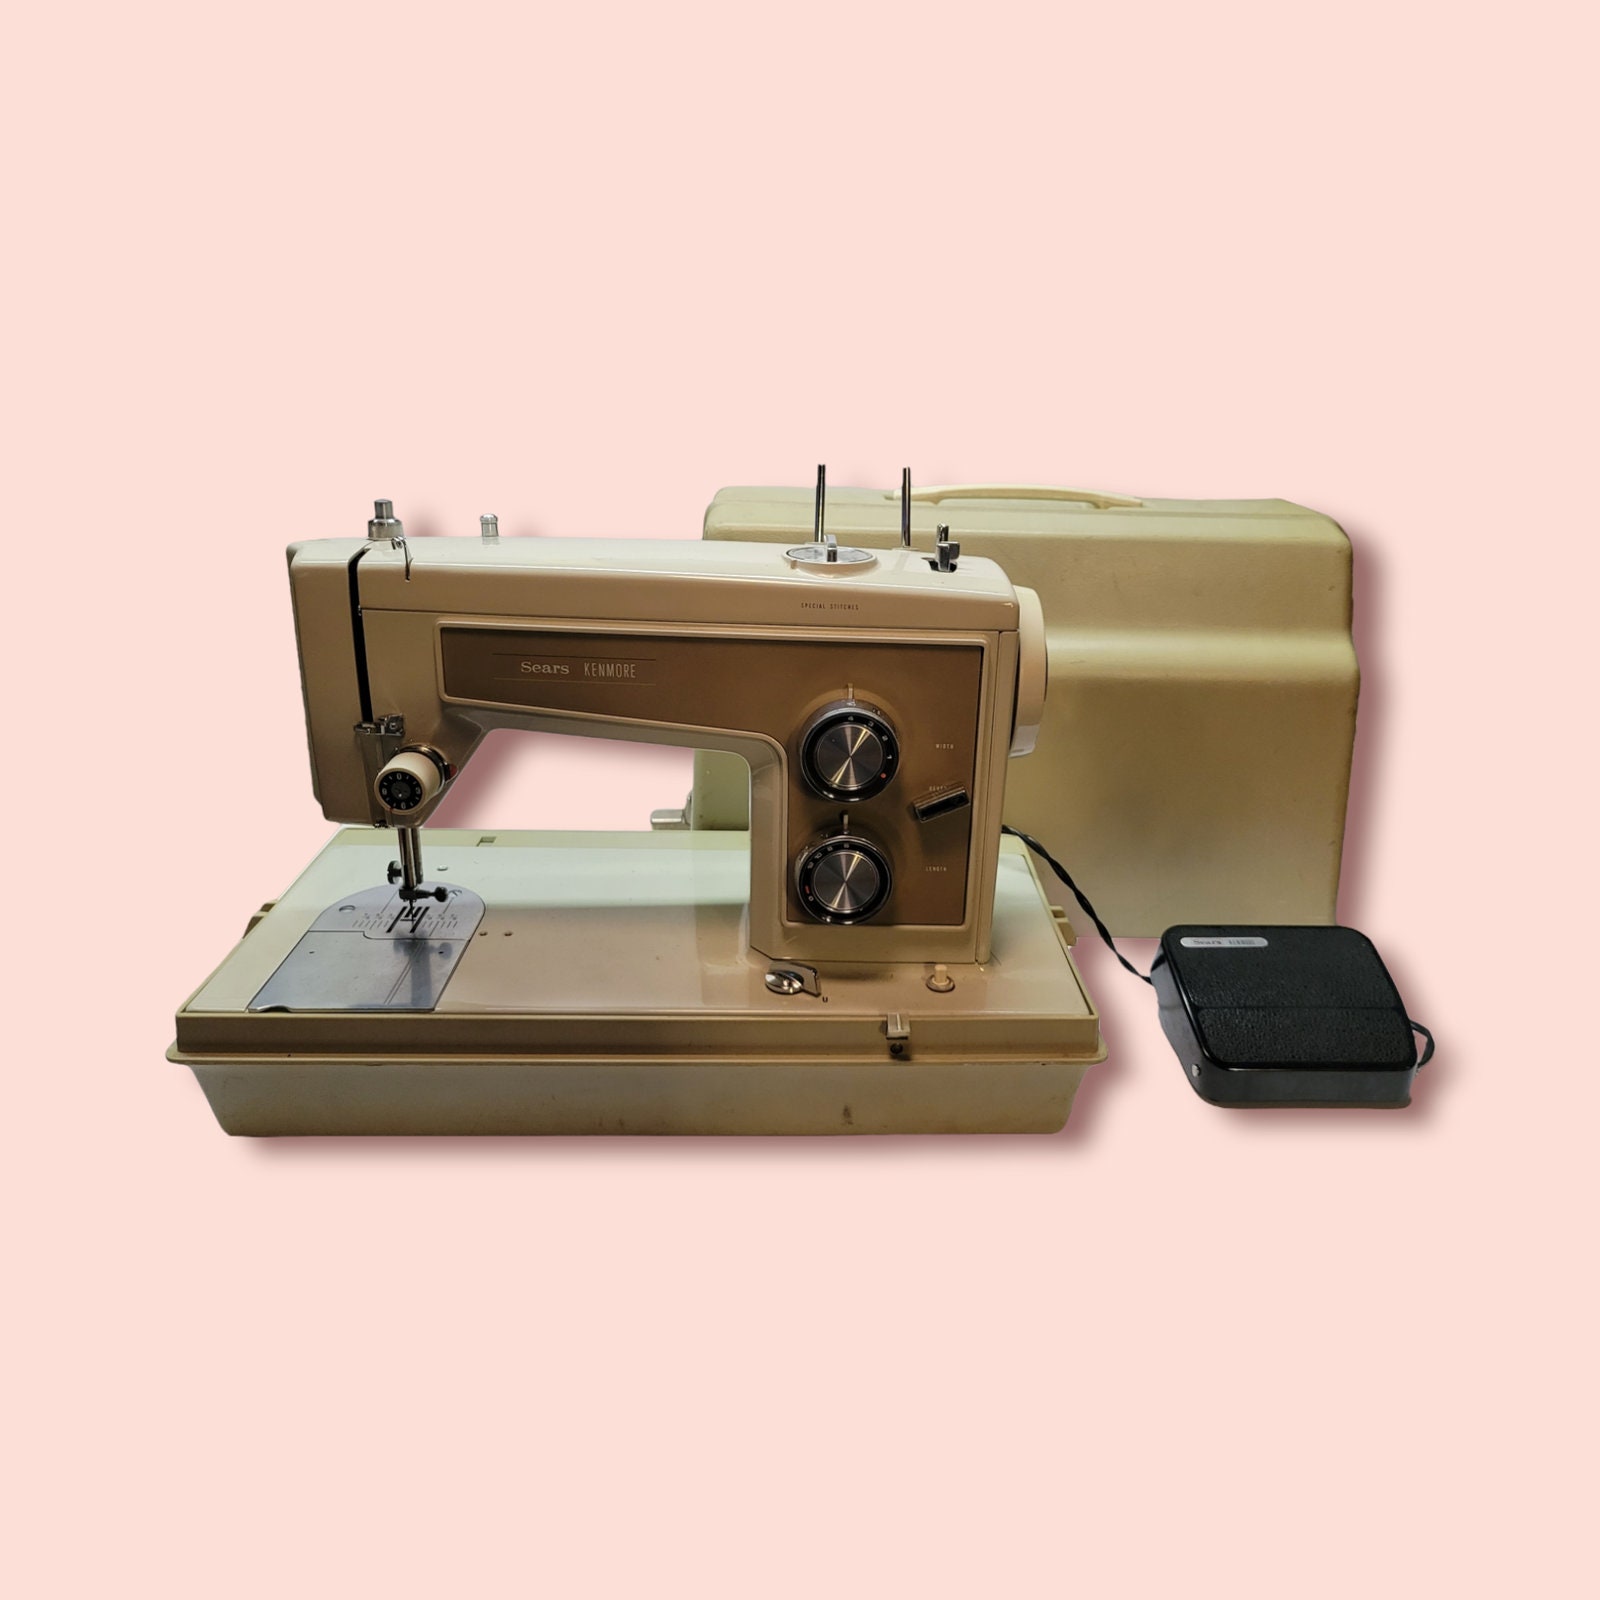 Kenmore 12, 158.120 158120, 158.121 158121 Zig-zag Sewing Machine